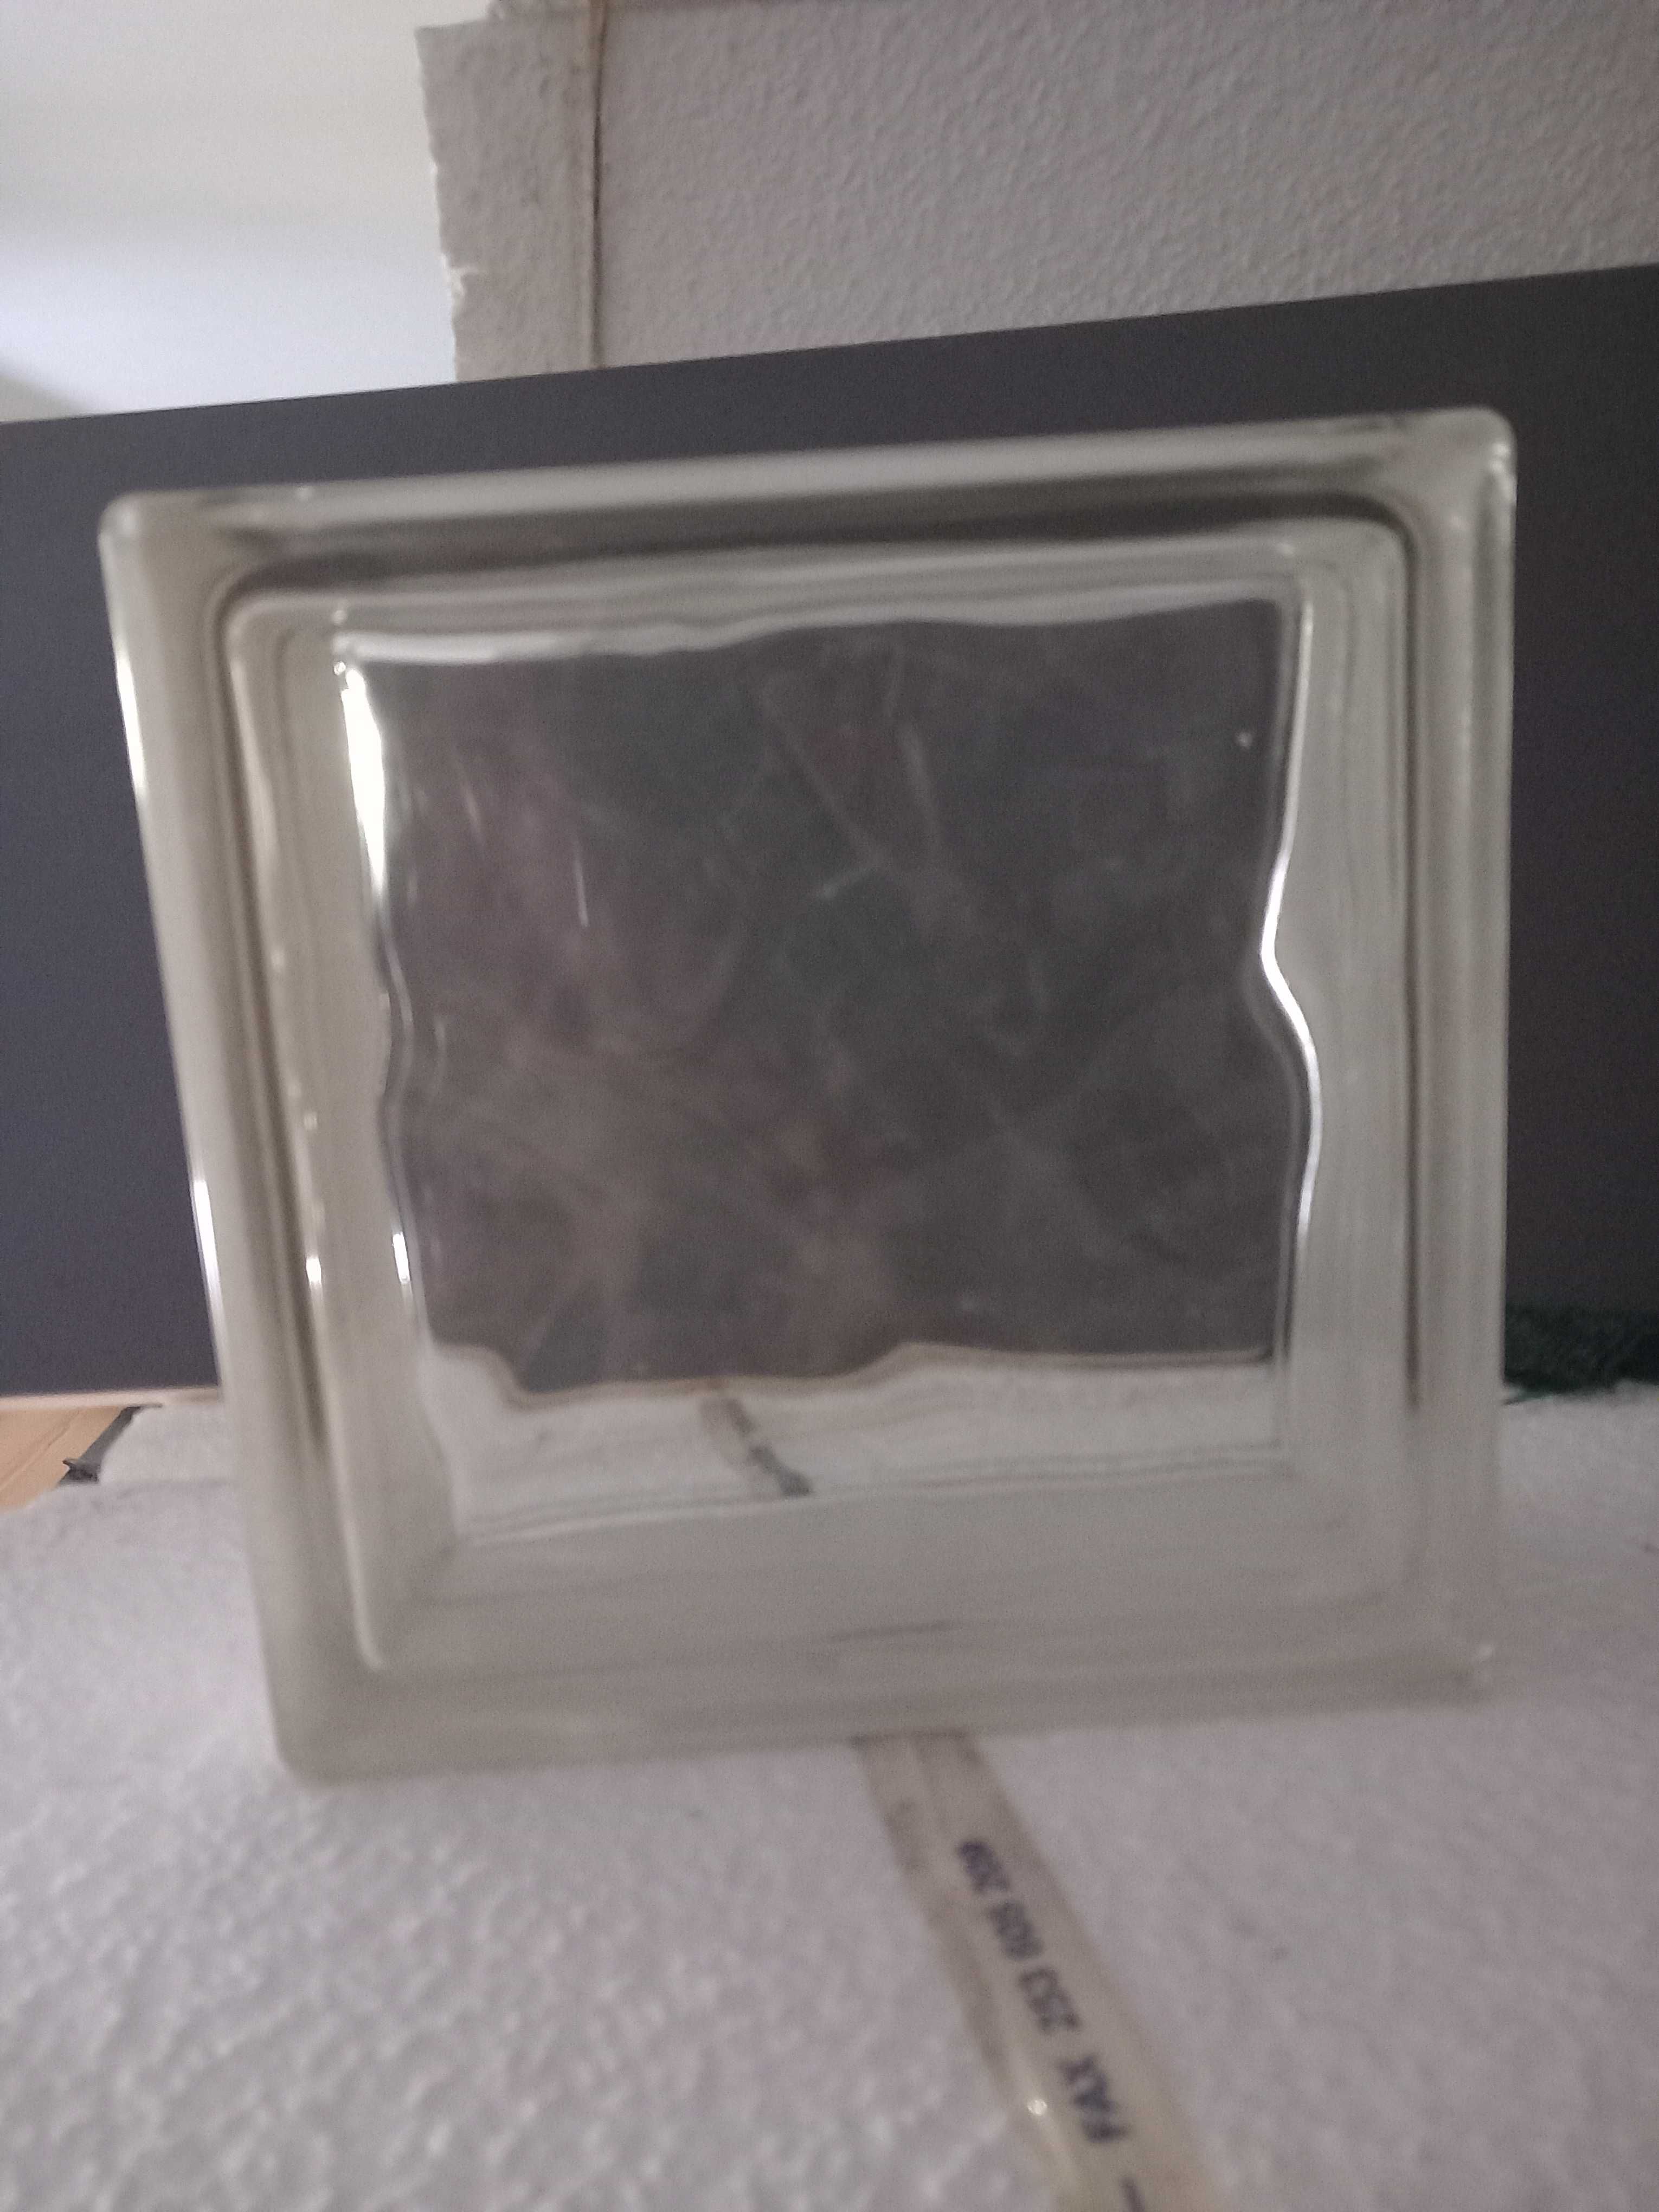 Blocos de vidro transparente, medidas 190x190x80 mm